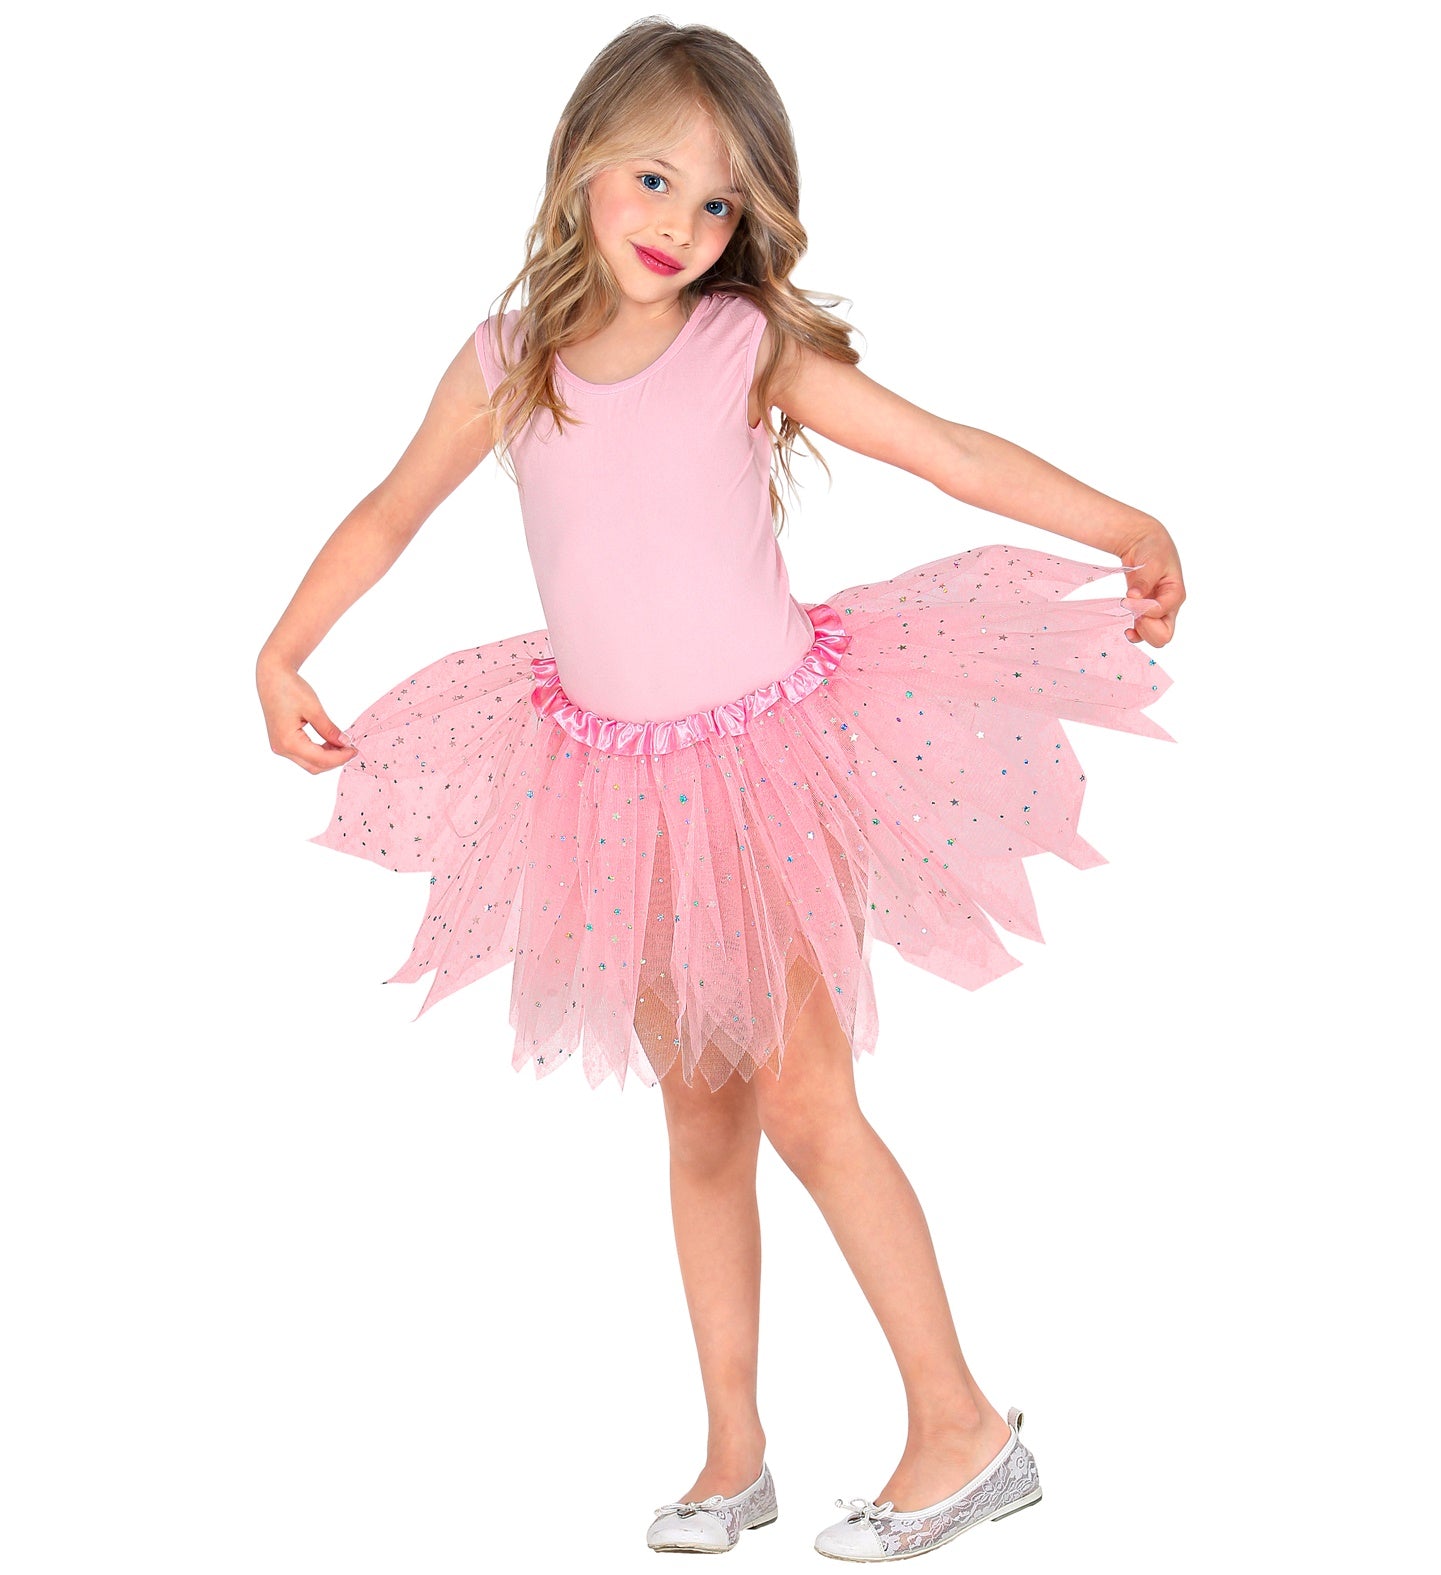 Sparkling Tutu Skirt Pink child's